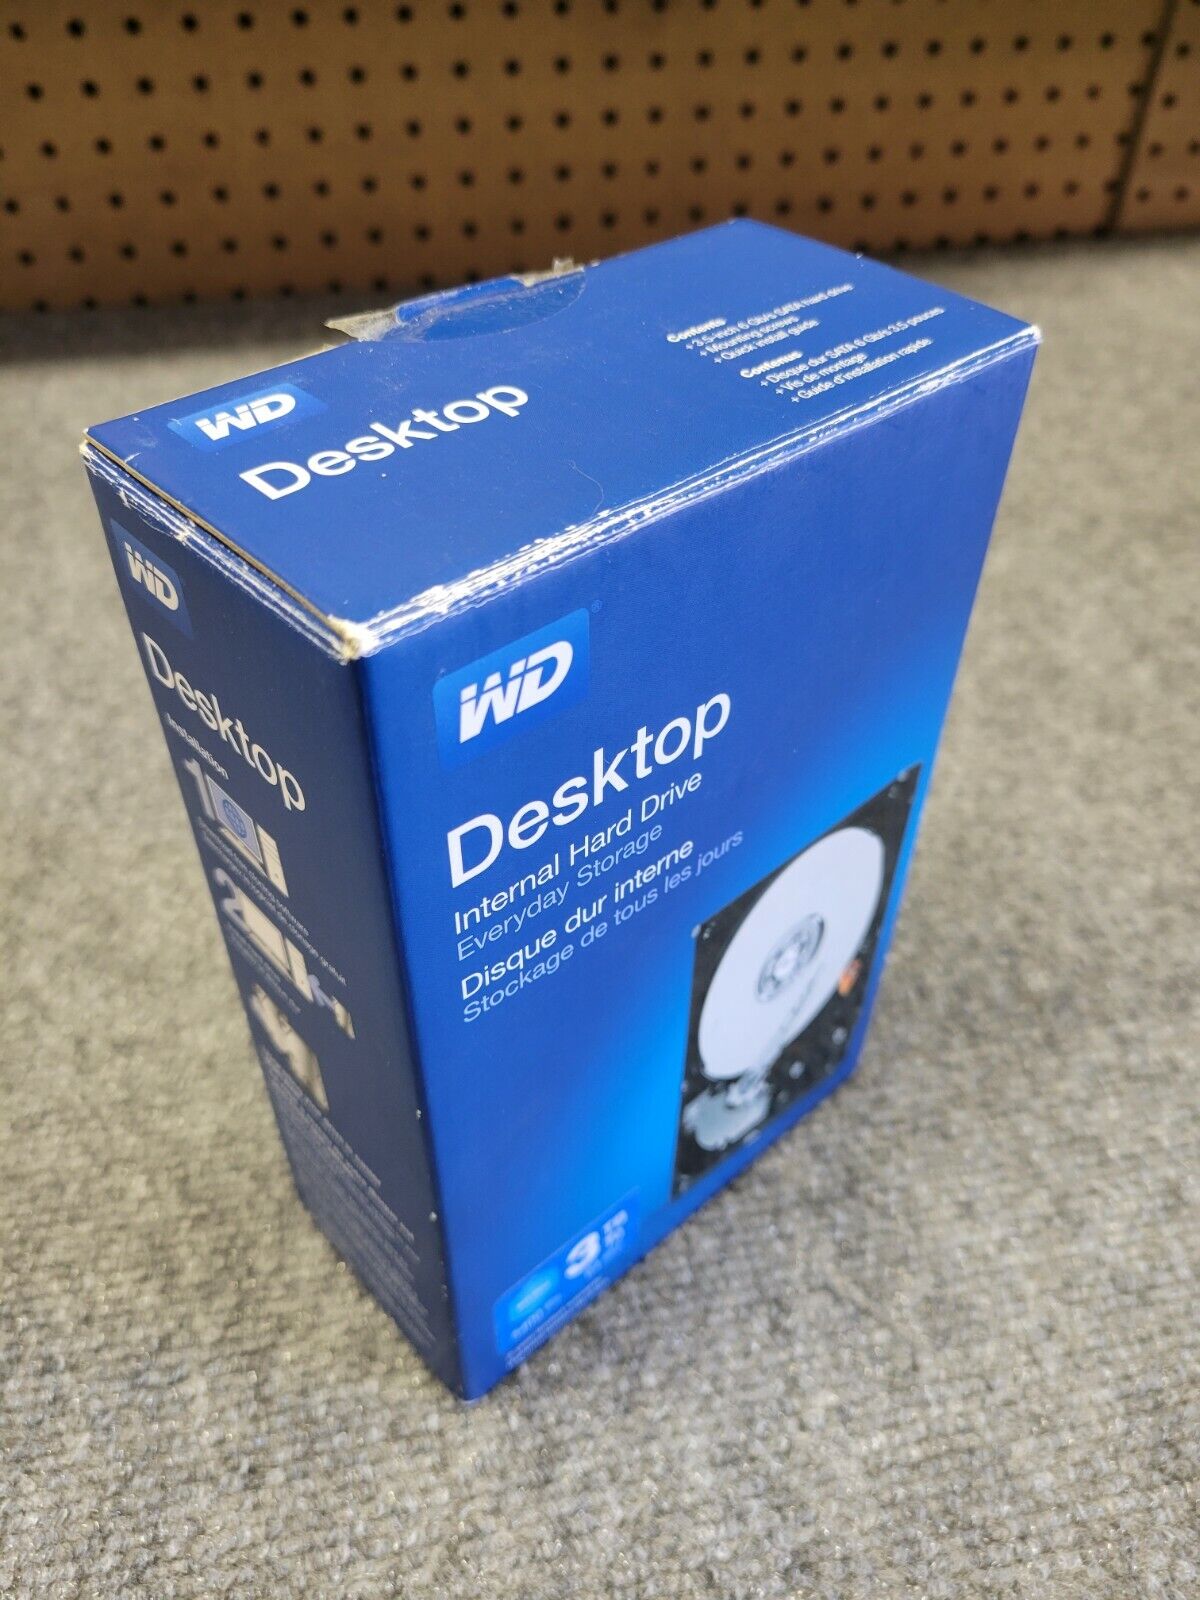 Western Digital WD BLUE 3TB Hard Drive WD30EZRZ 00GXCB0 Unopened Packaging